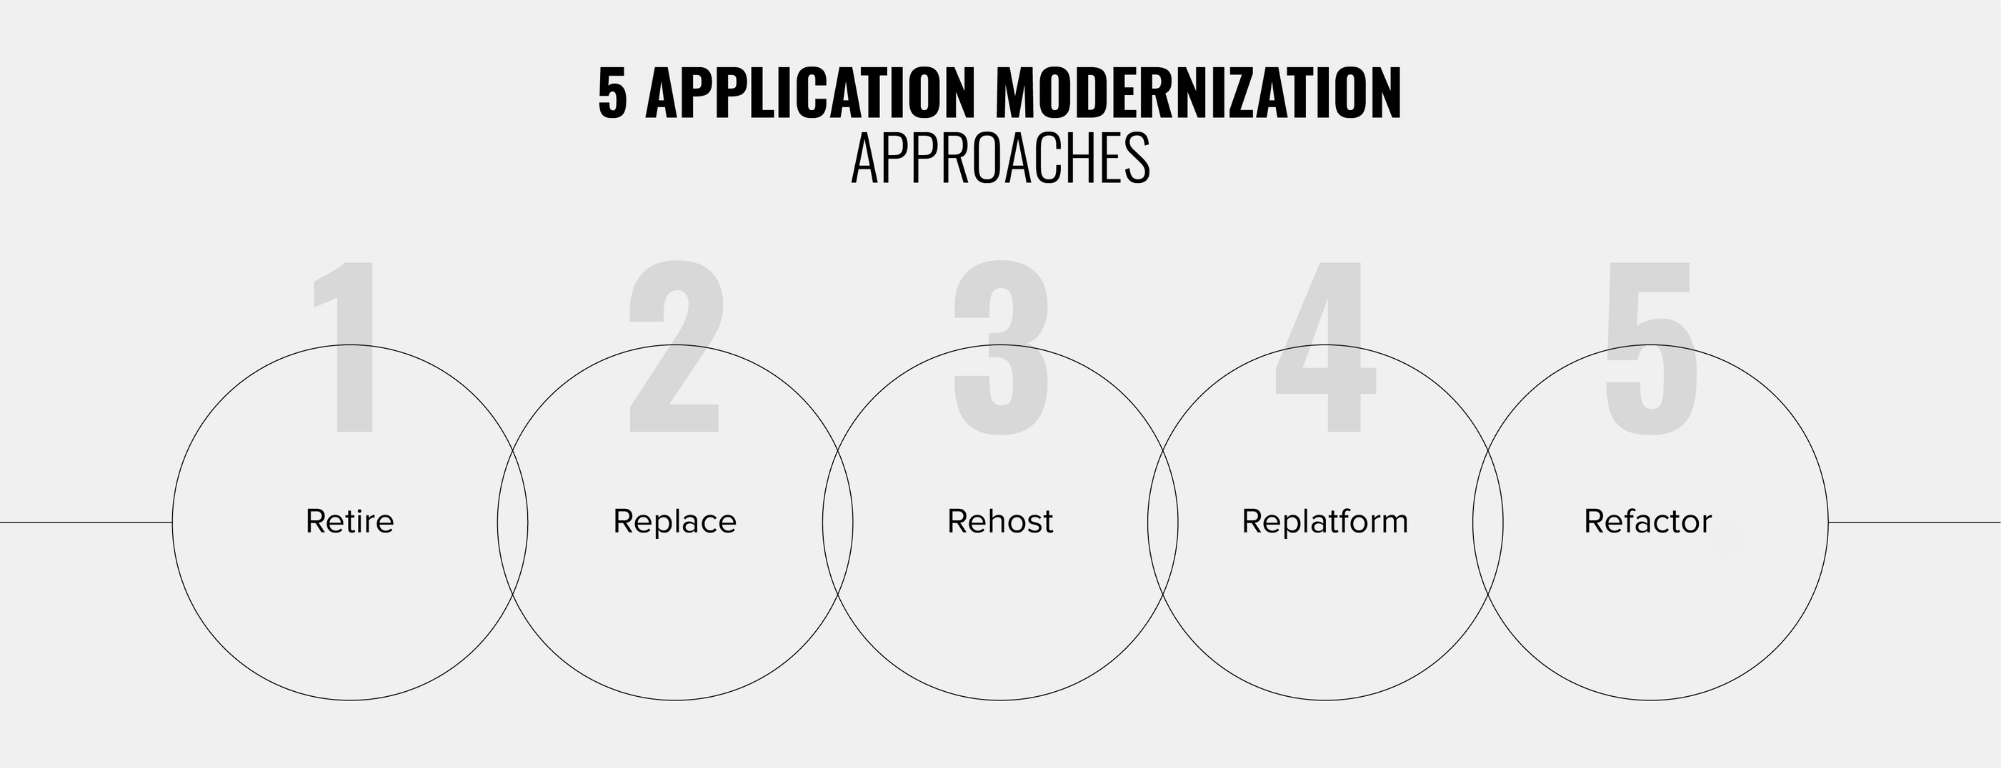 5 application modernization approaches illustration